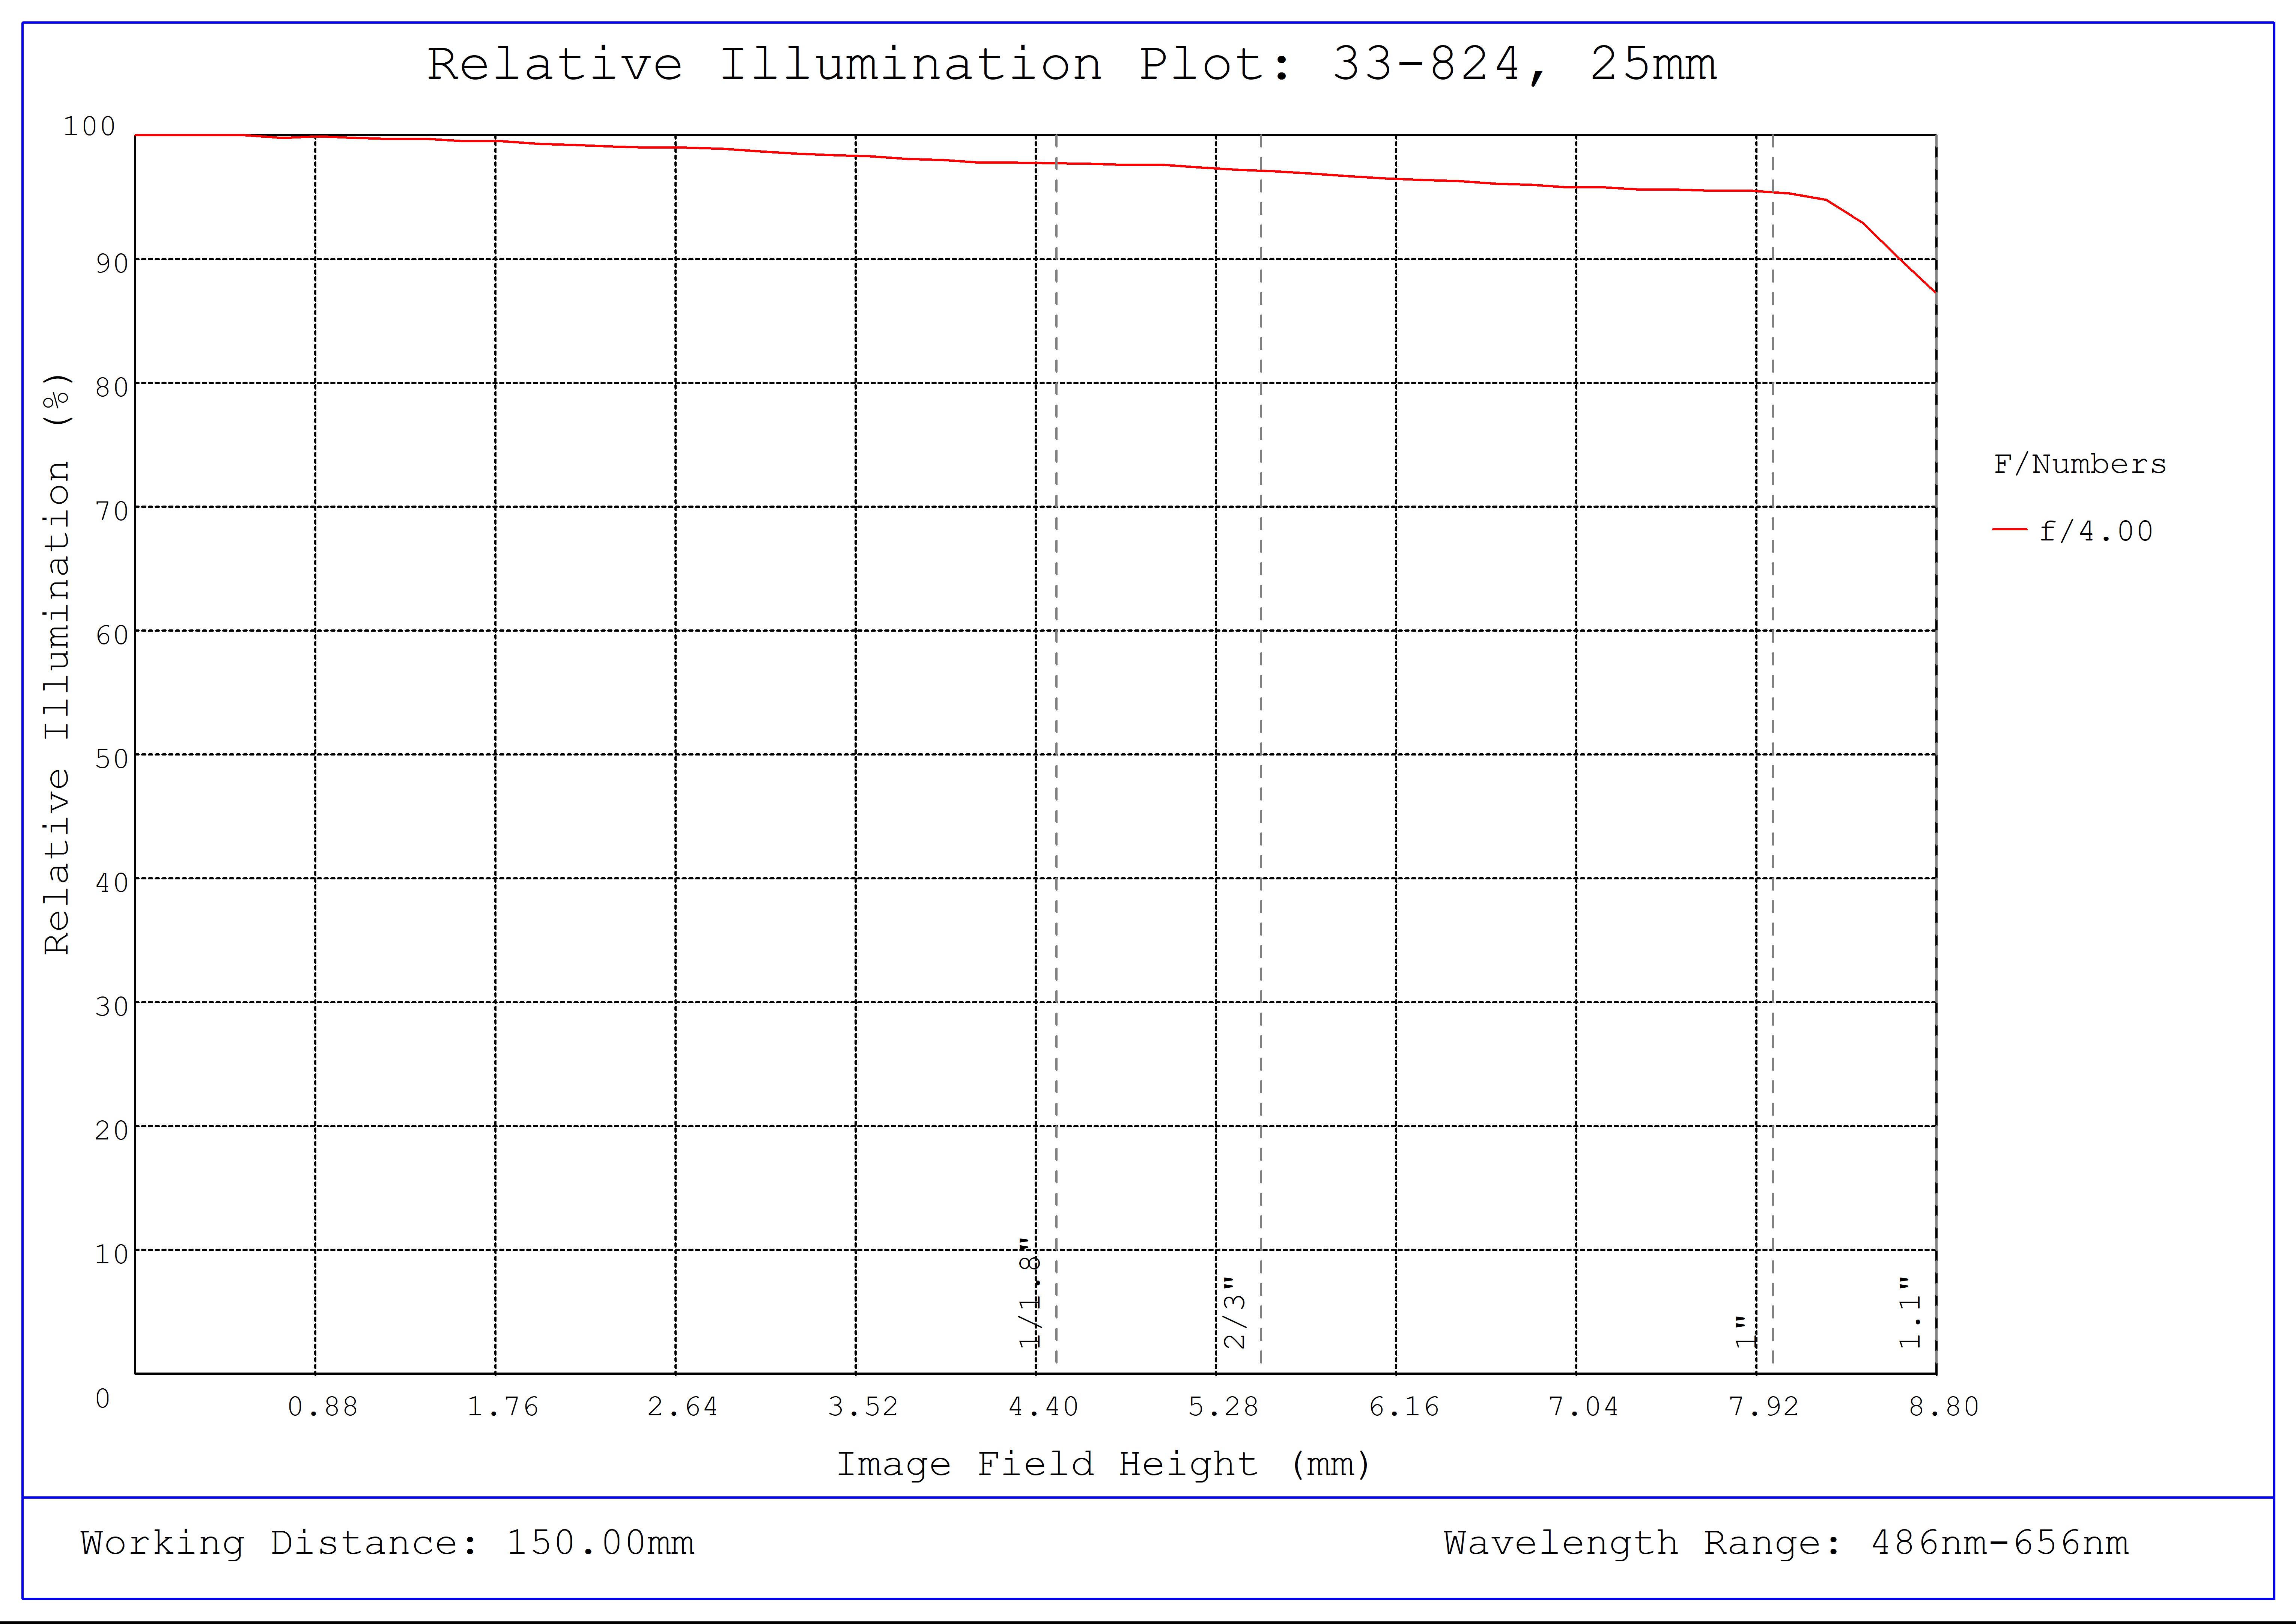 #33-824, 25mm f/4.0, HPi Series Fixed Focal Length Lens, Relative Illumination Plot